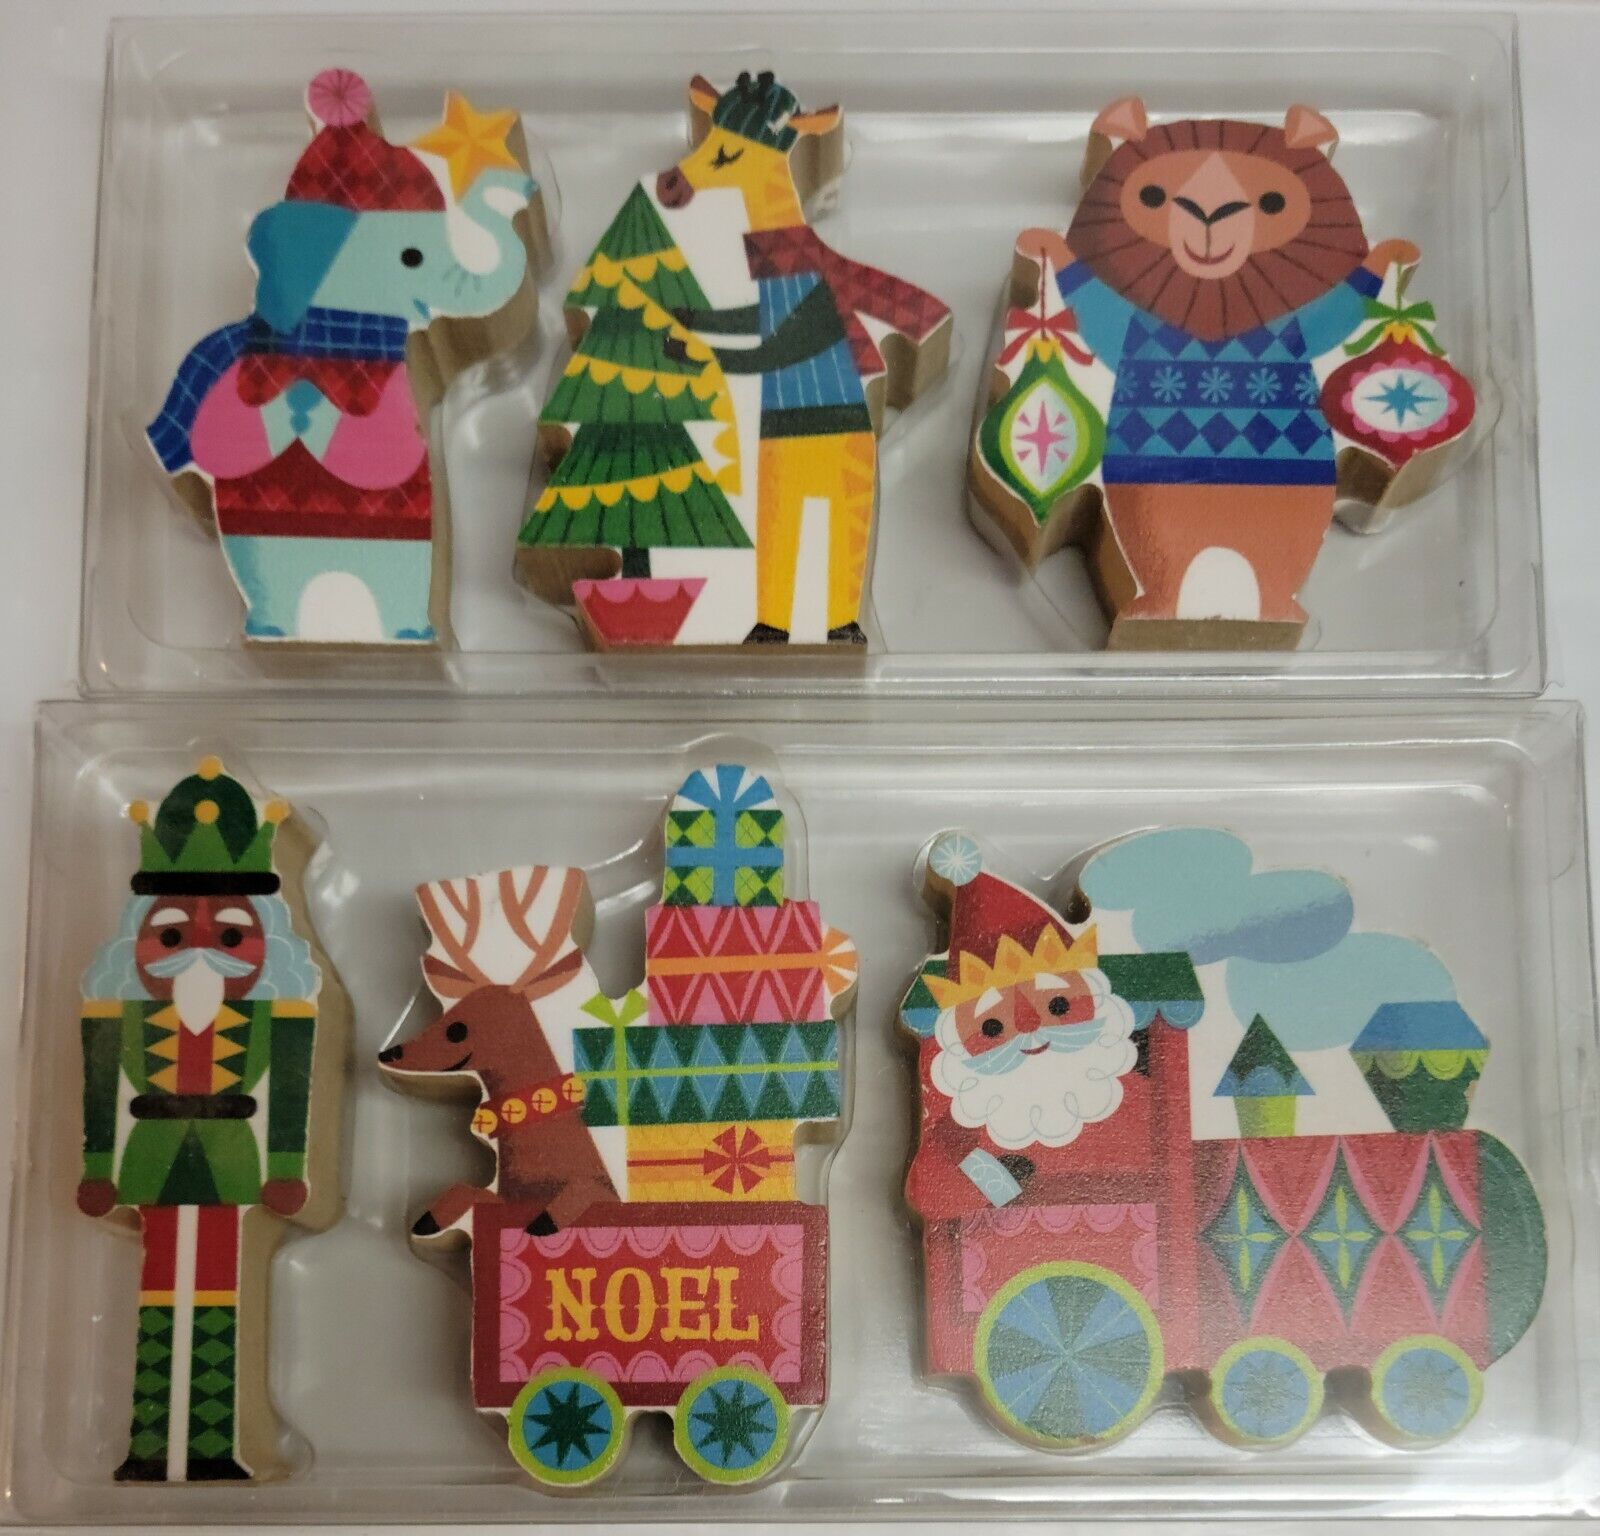 6pc Wondershop Decorative Wood Mantel Character Figures Santa Train Christmas 3